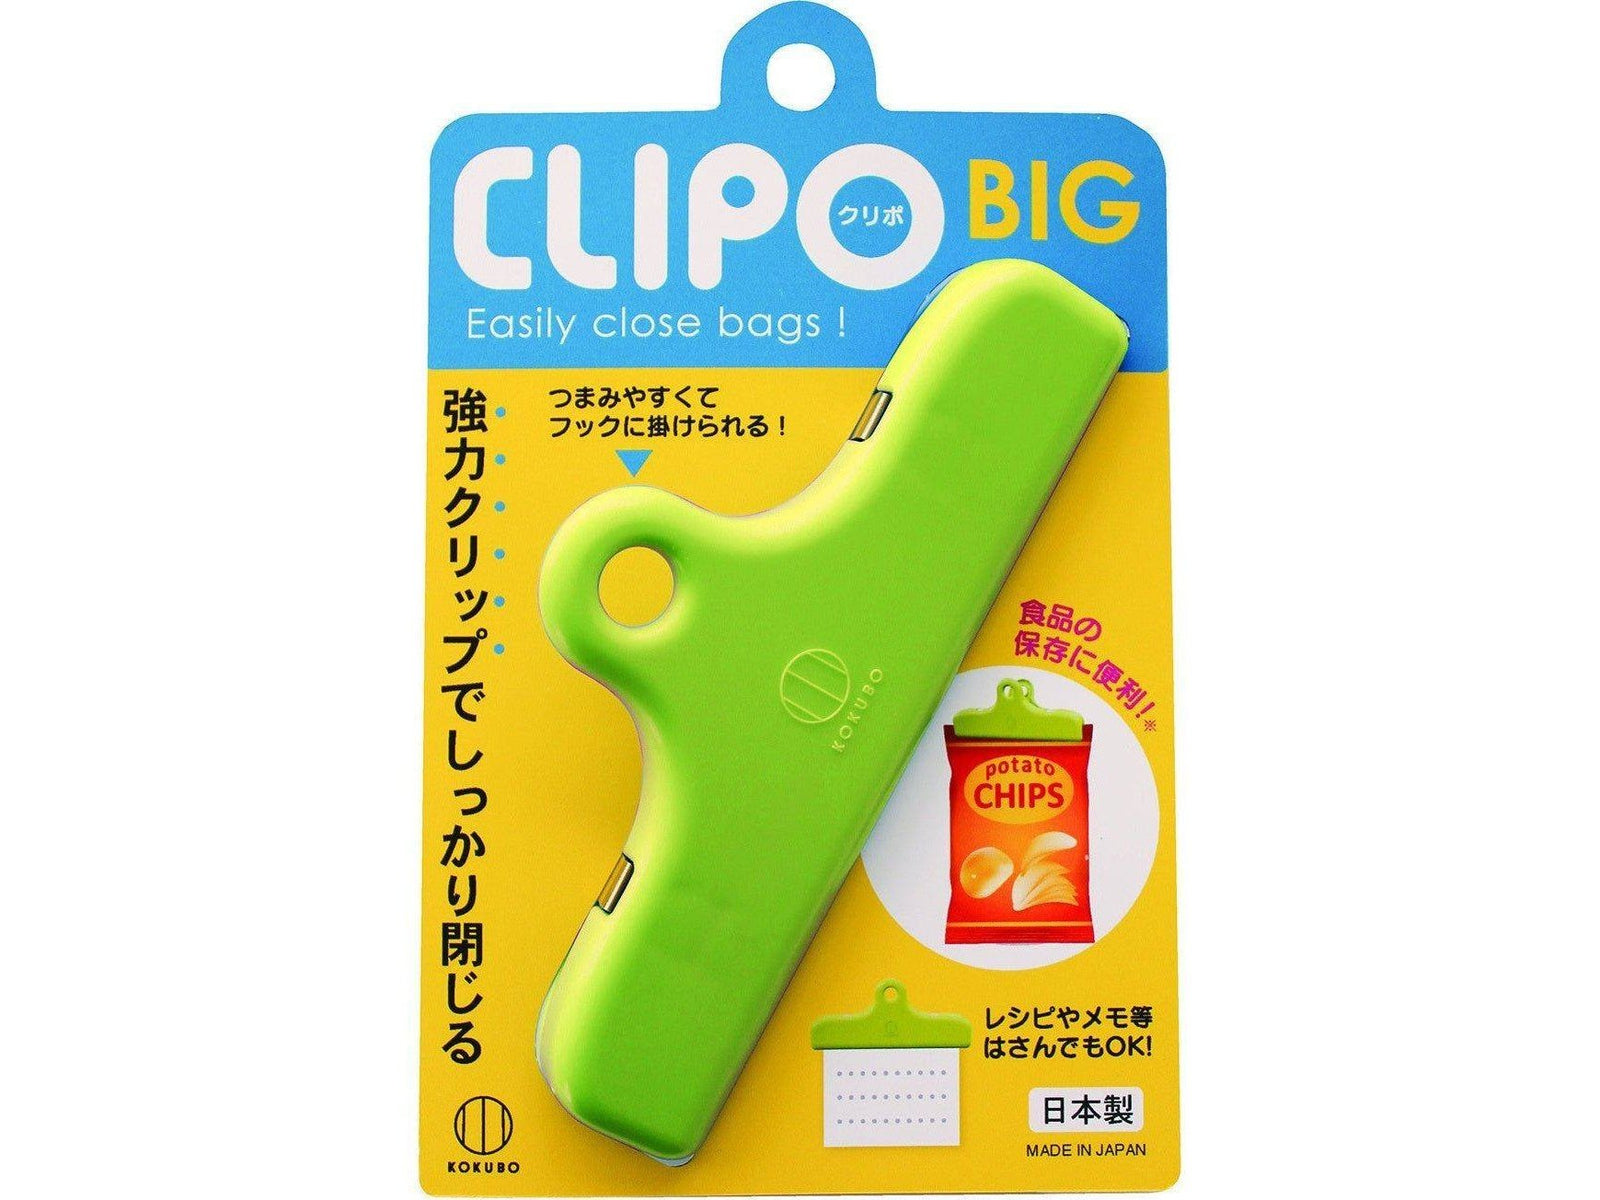 Kokubo Clipo Clip Big